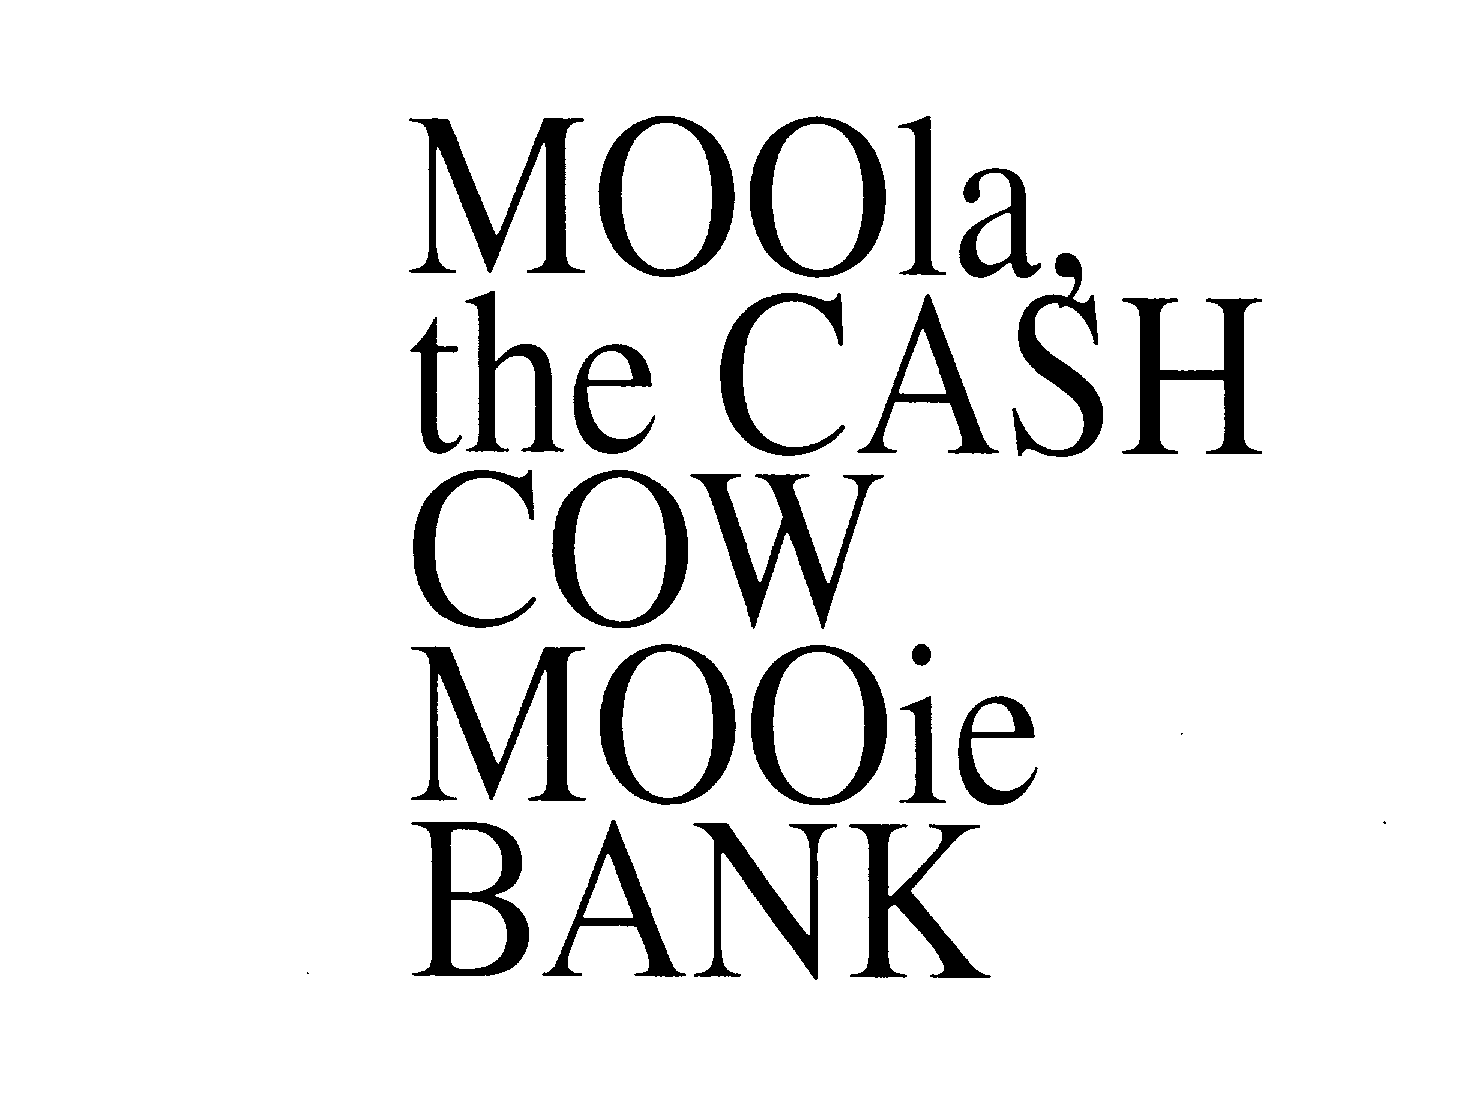  MOOLA, THE CASH COW MOOIE BANK